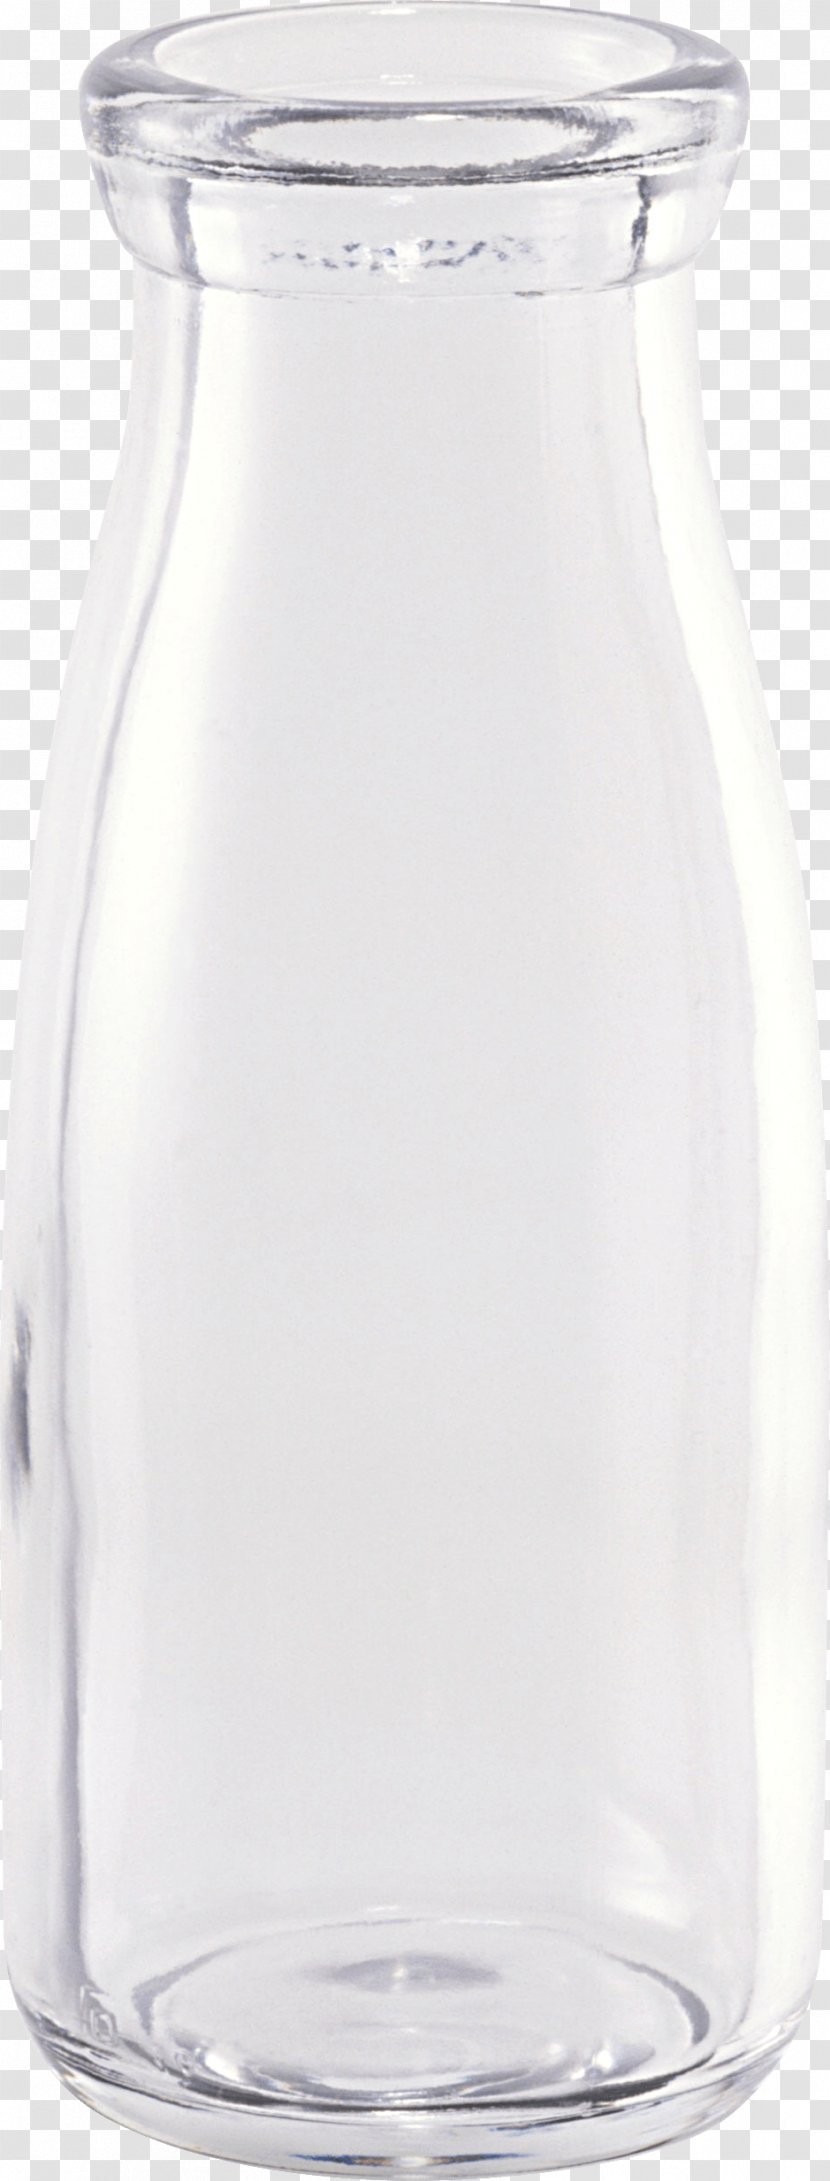 Glass Bottle Juice - Beer - Empty Image Transparent PNG